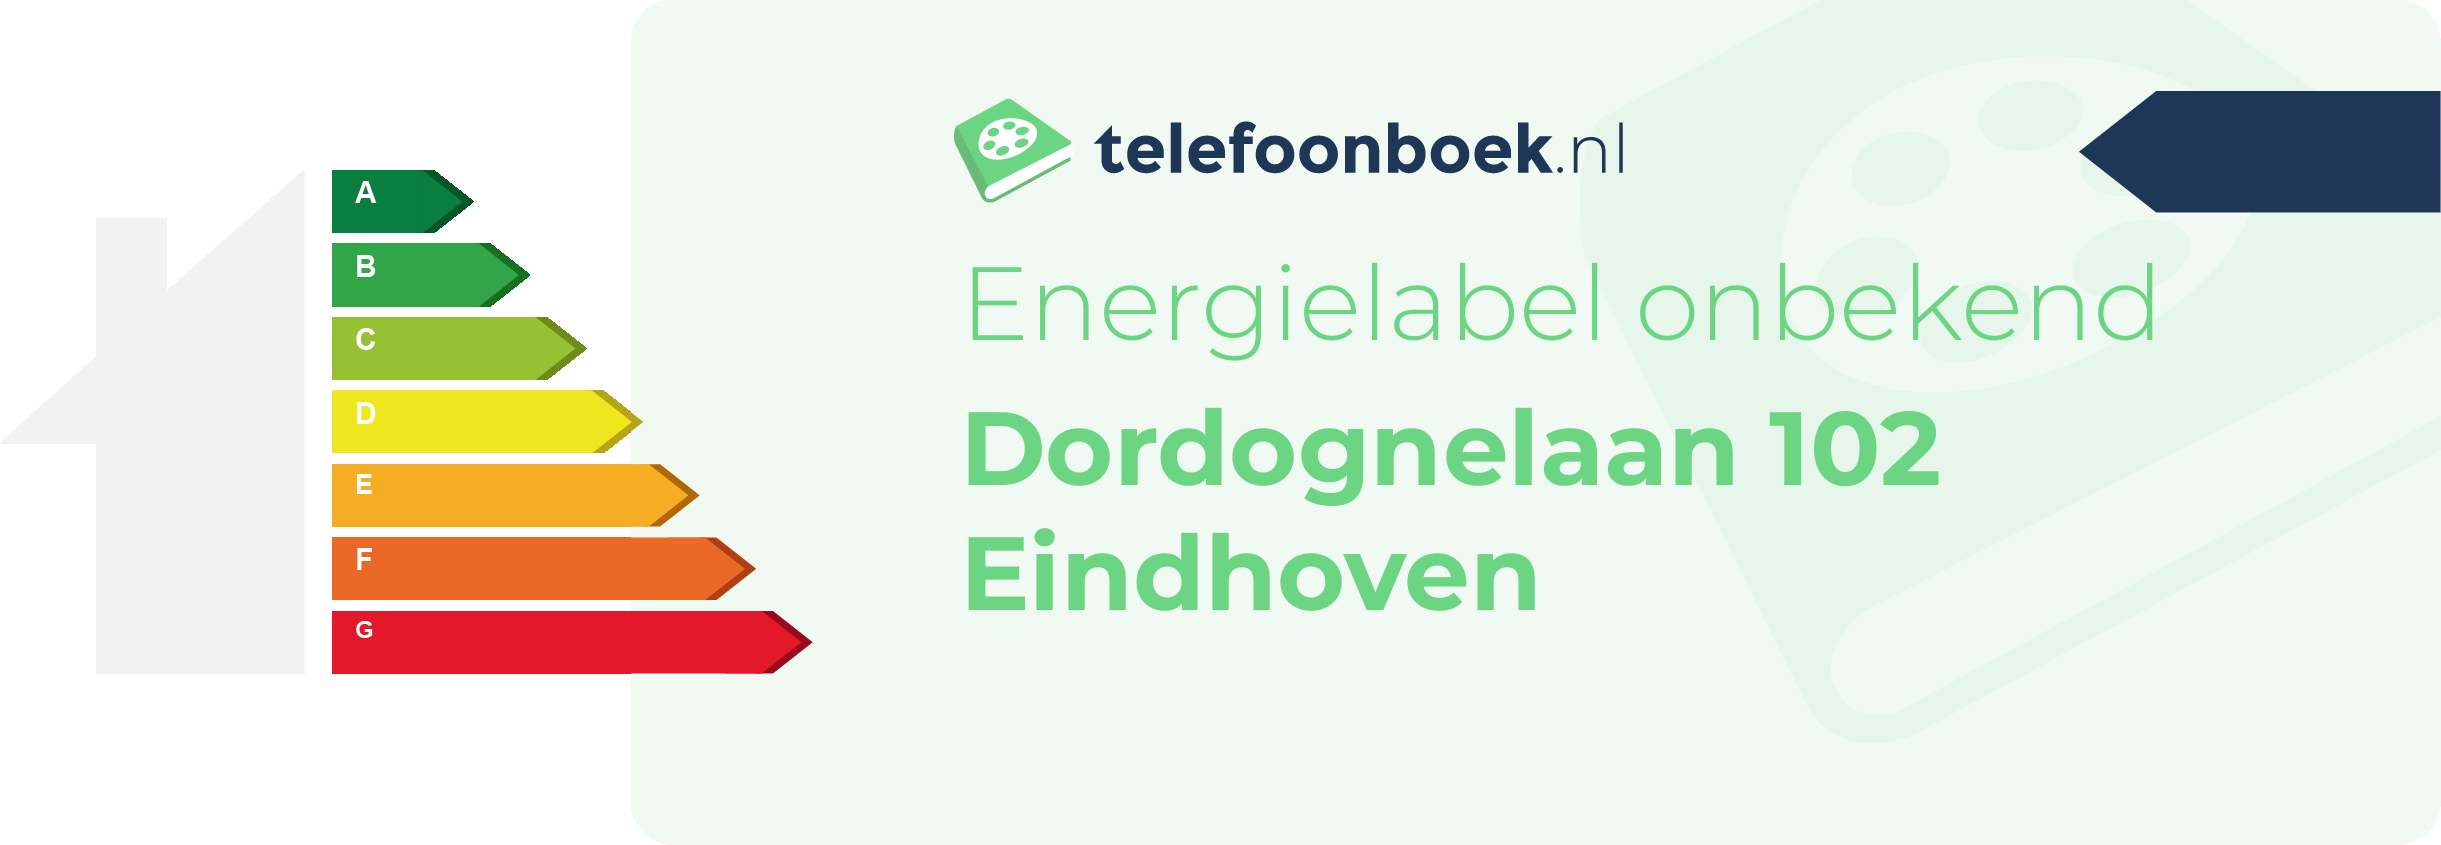 Energielabel Dordognelaan 102 Eindhoven